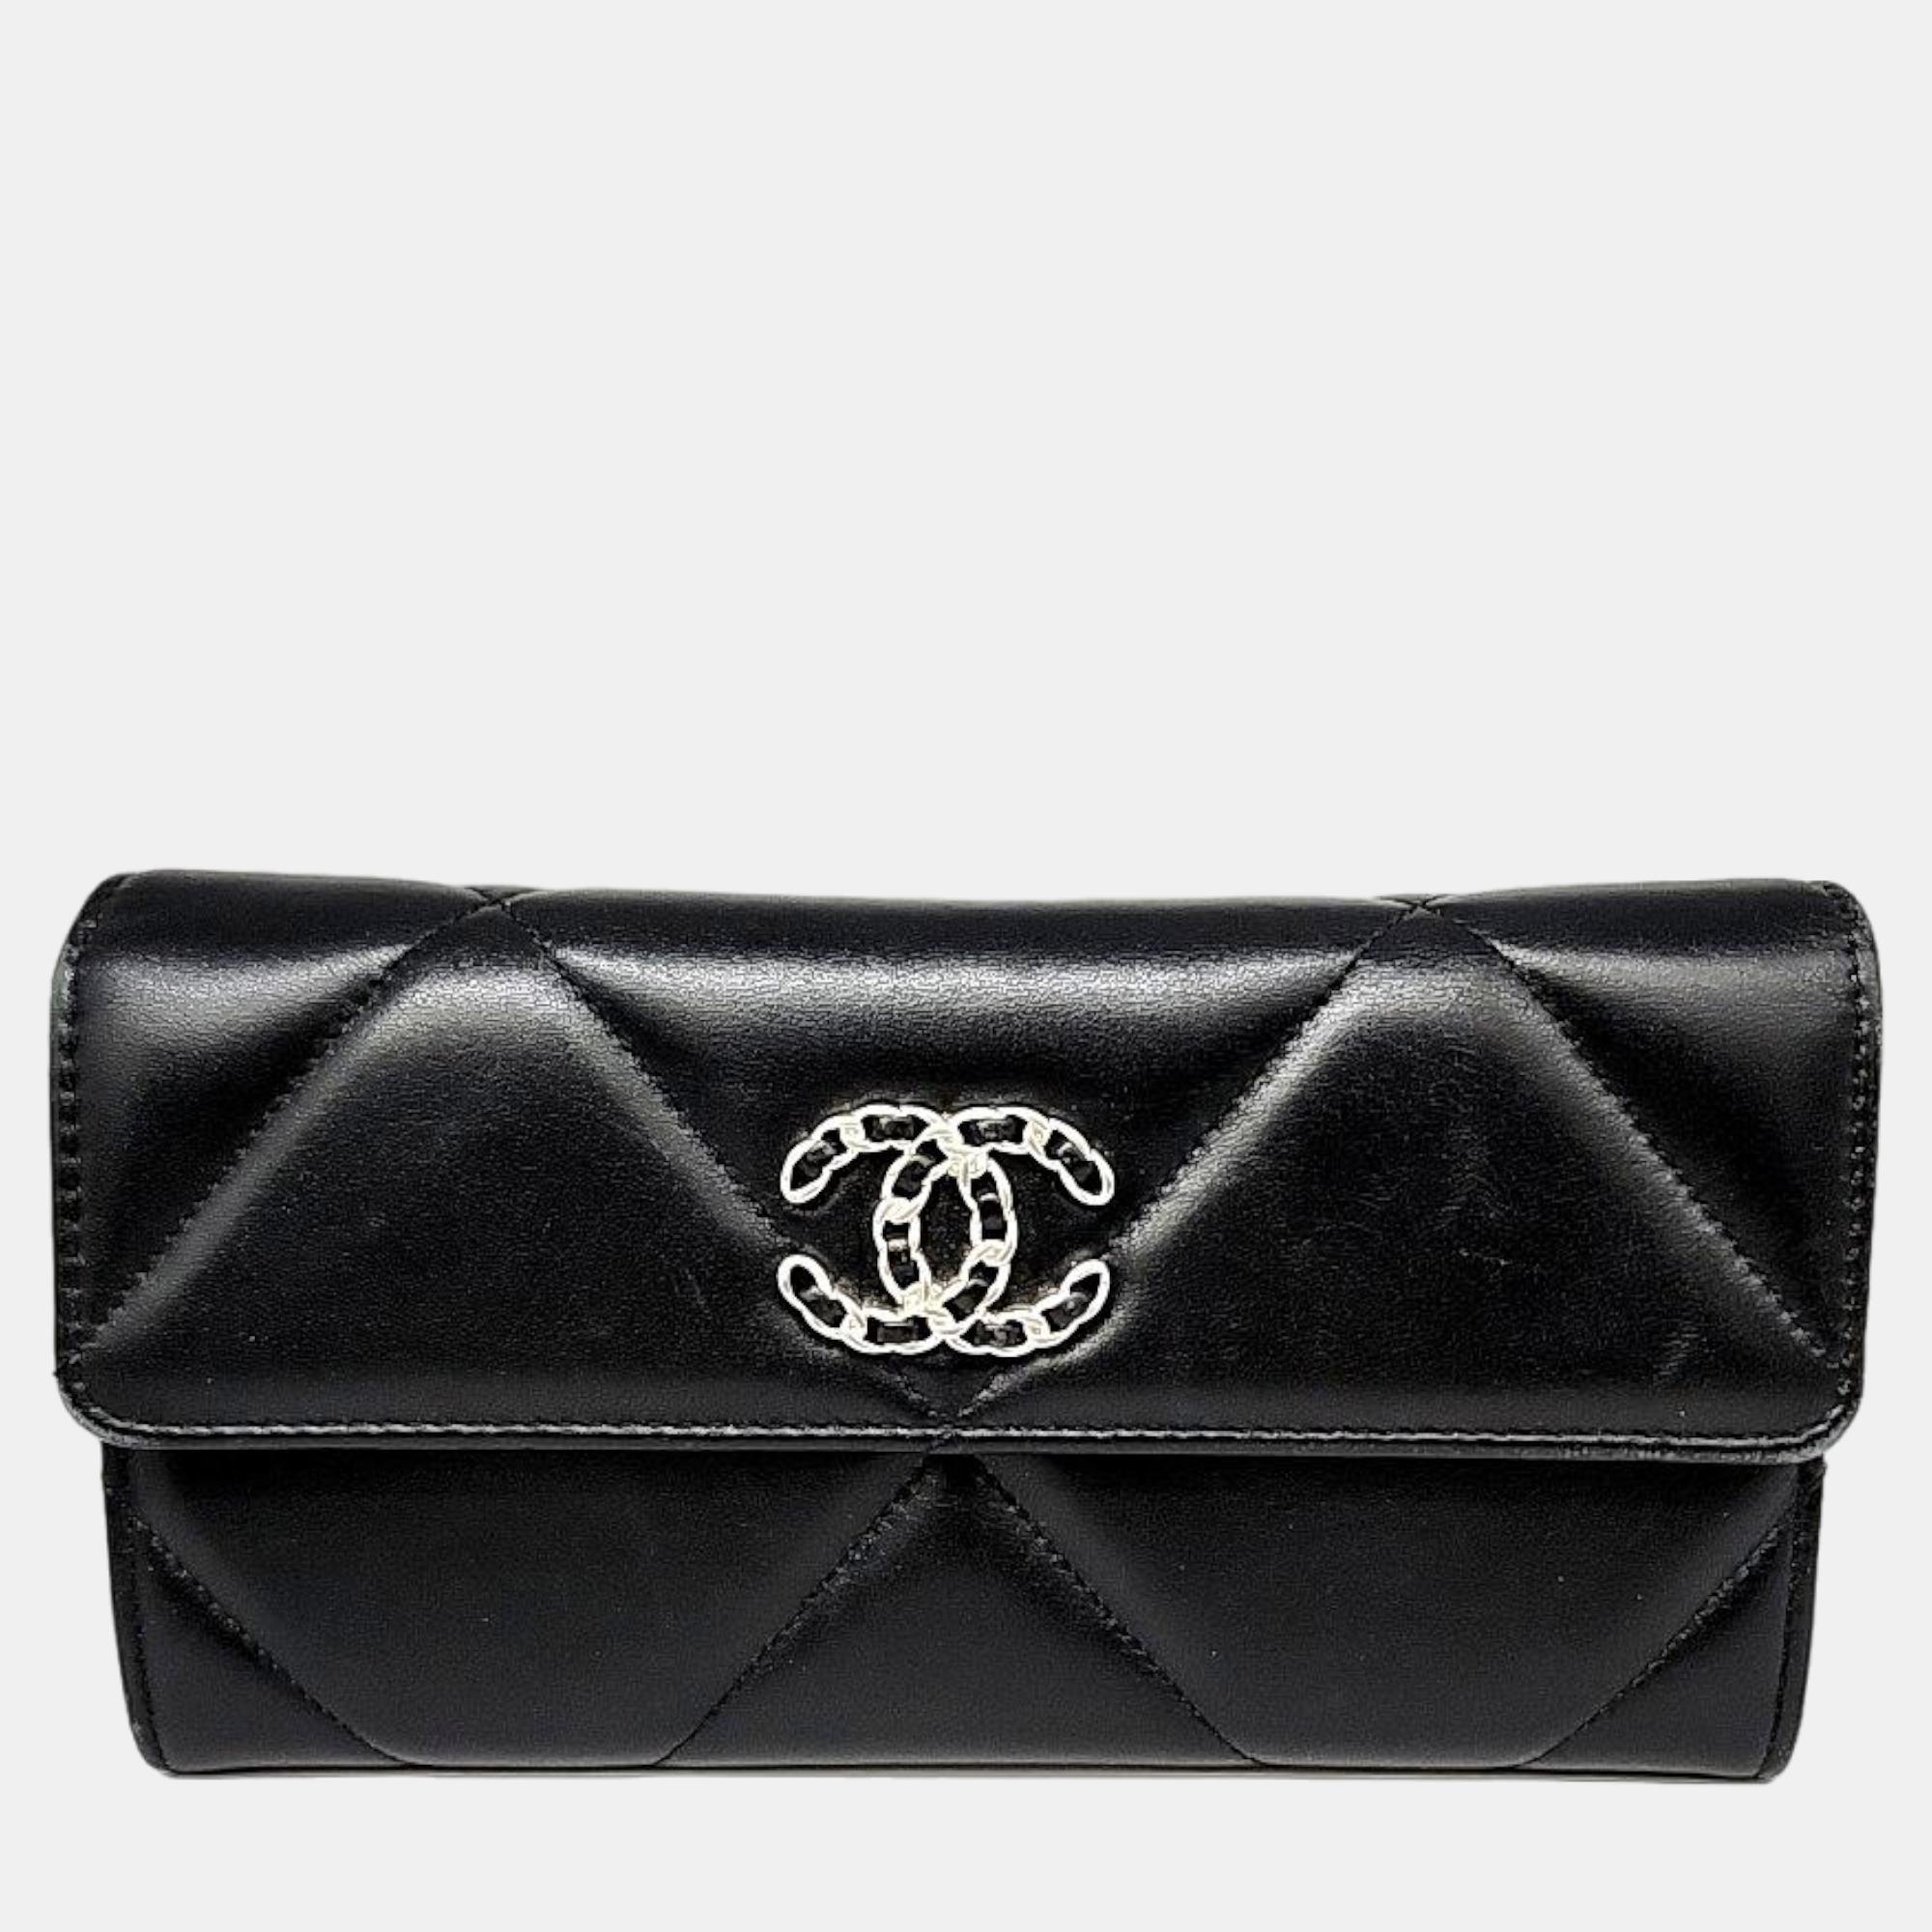 Chanel Black Leather 19 Flap Wallet